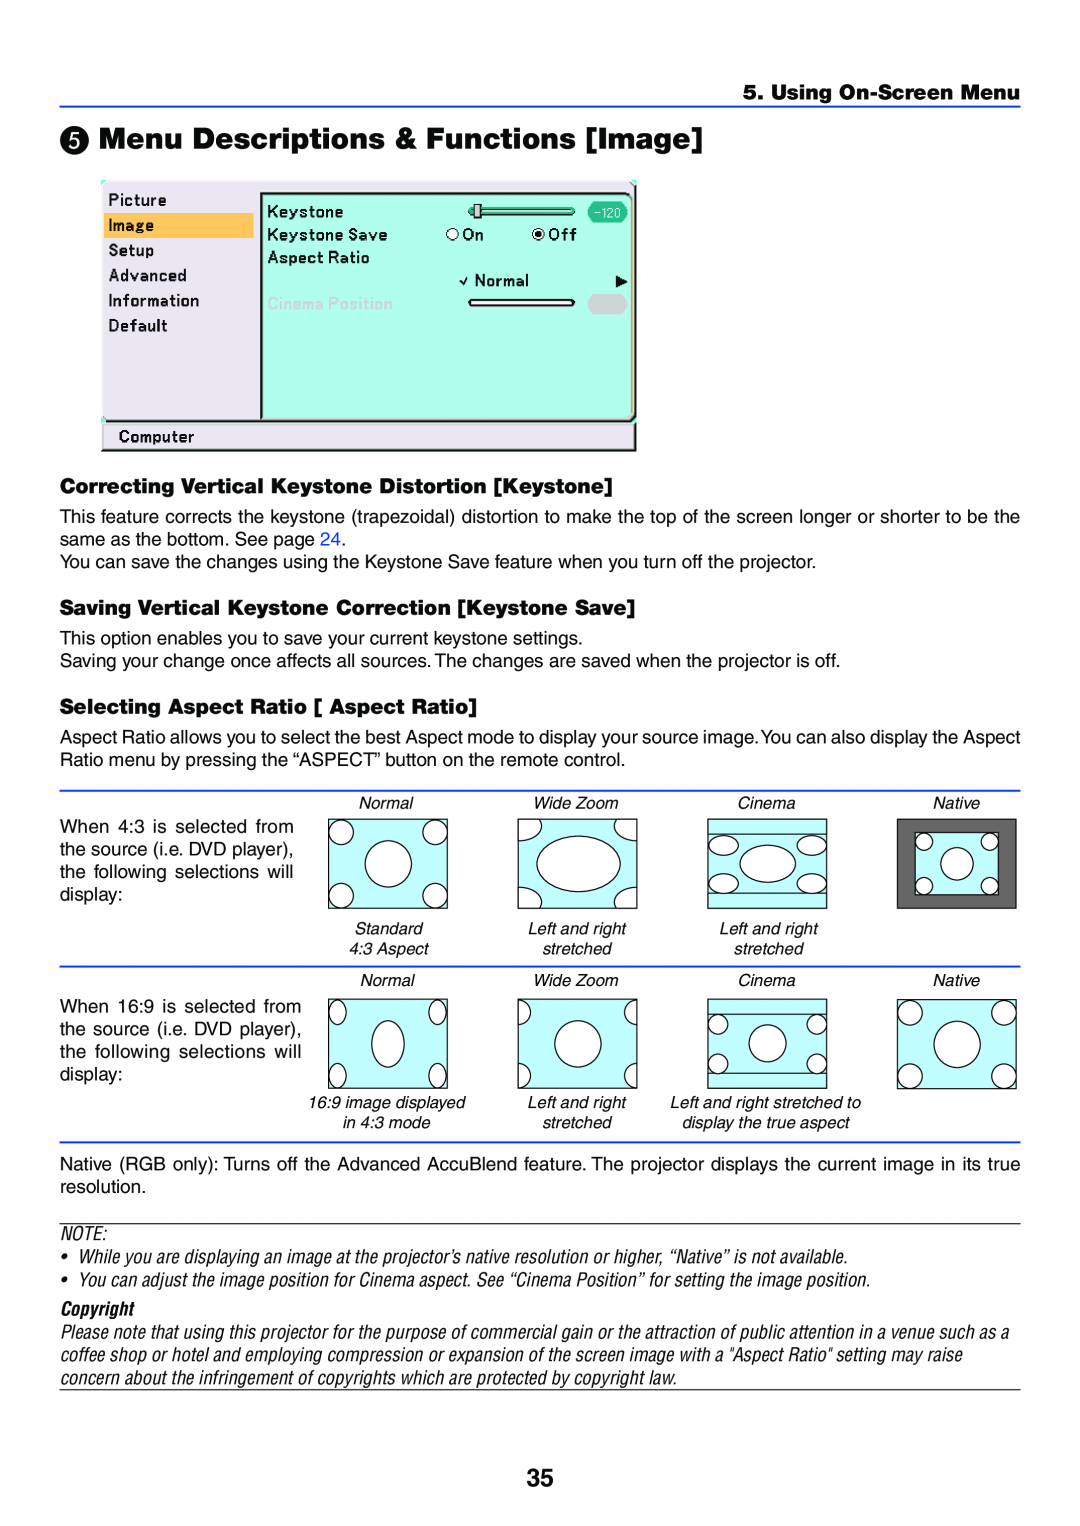 NEC VT37 manual Menu Descriptions & Functions Image, Correcting Vertical Keystone Distortion Keystone, Using On-Screen Menu 